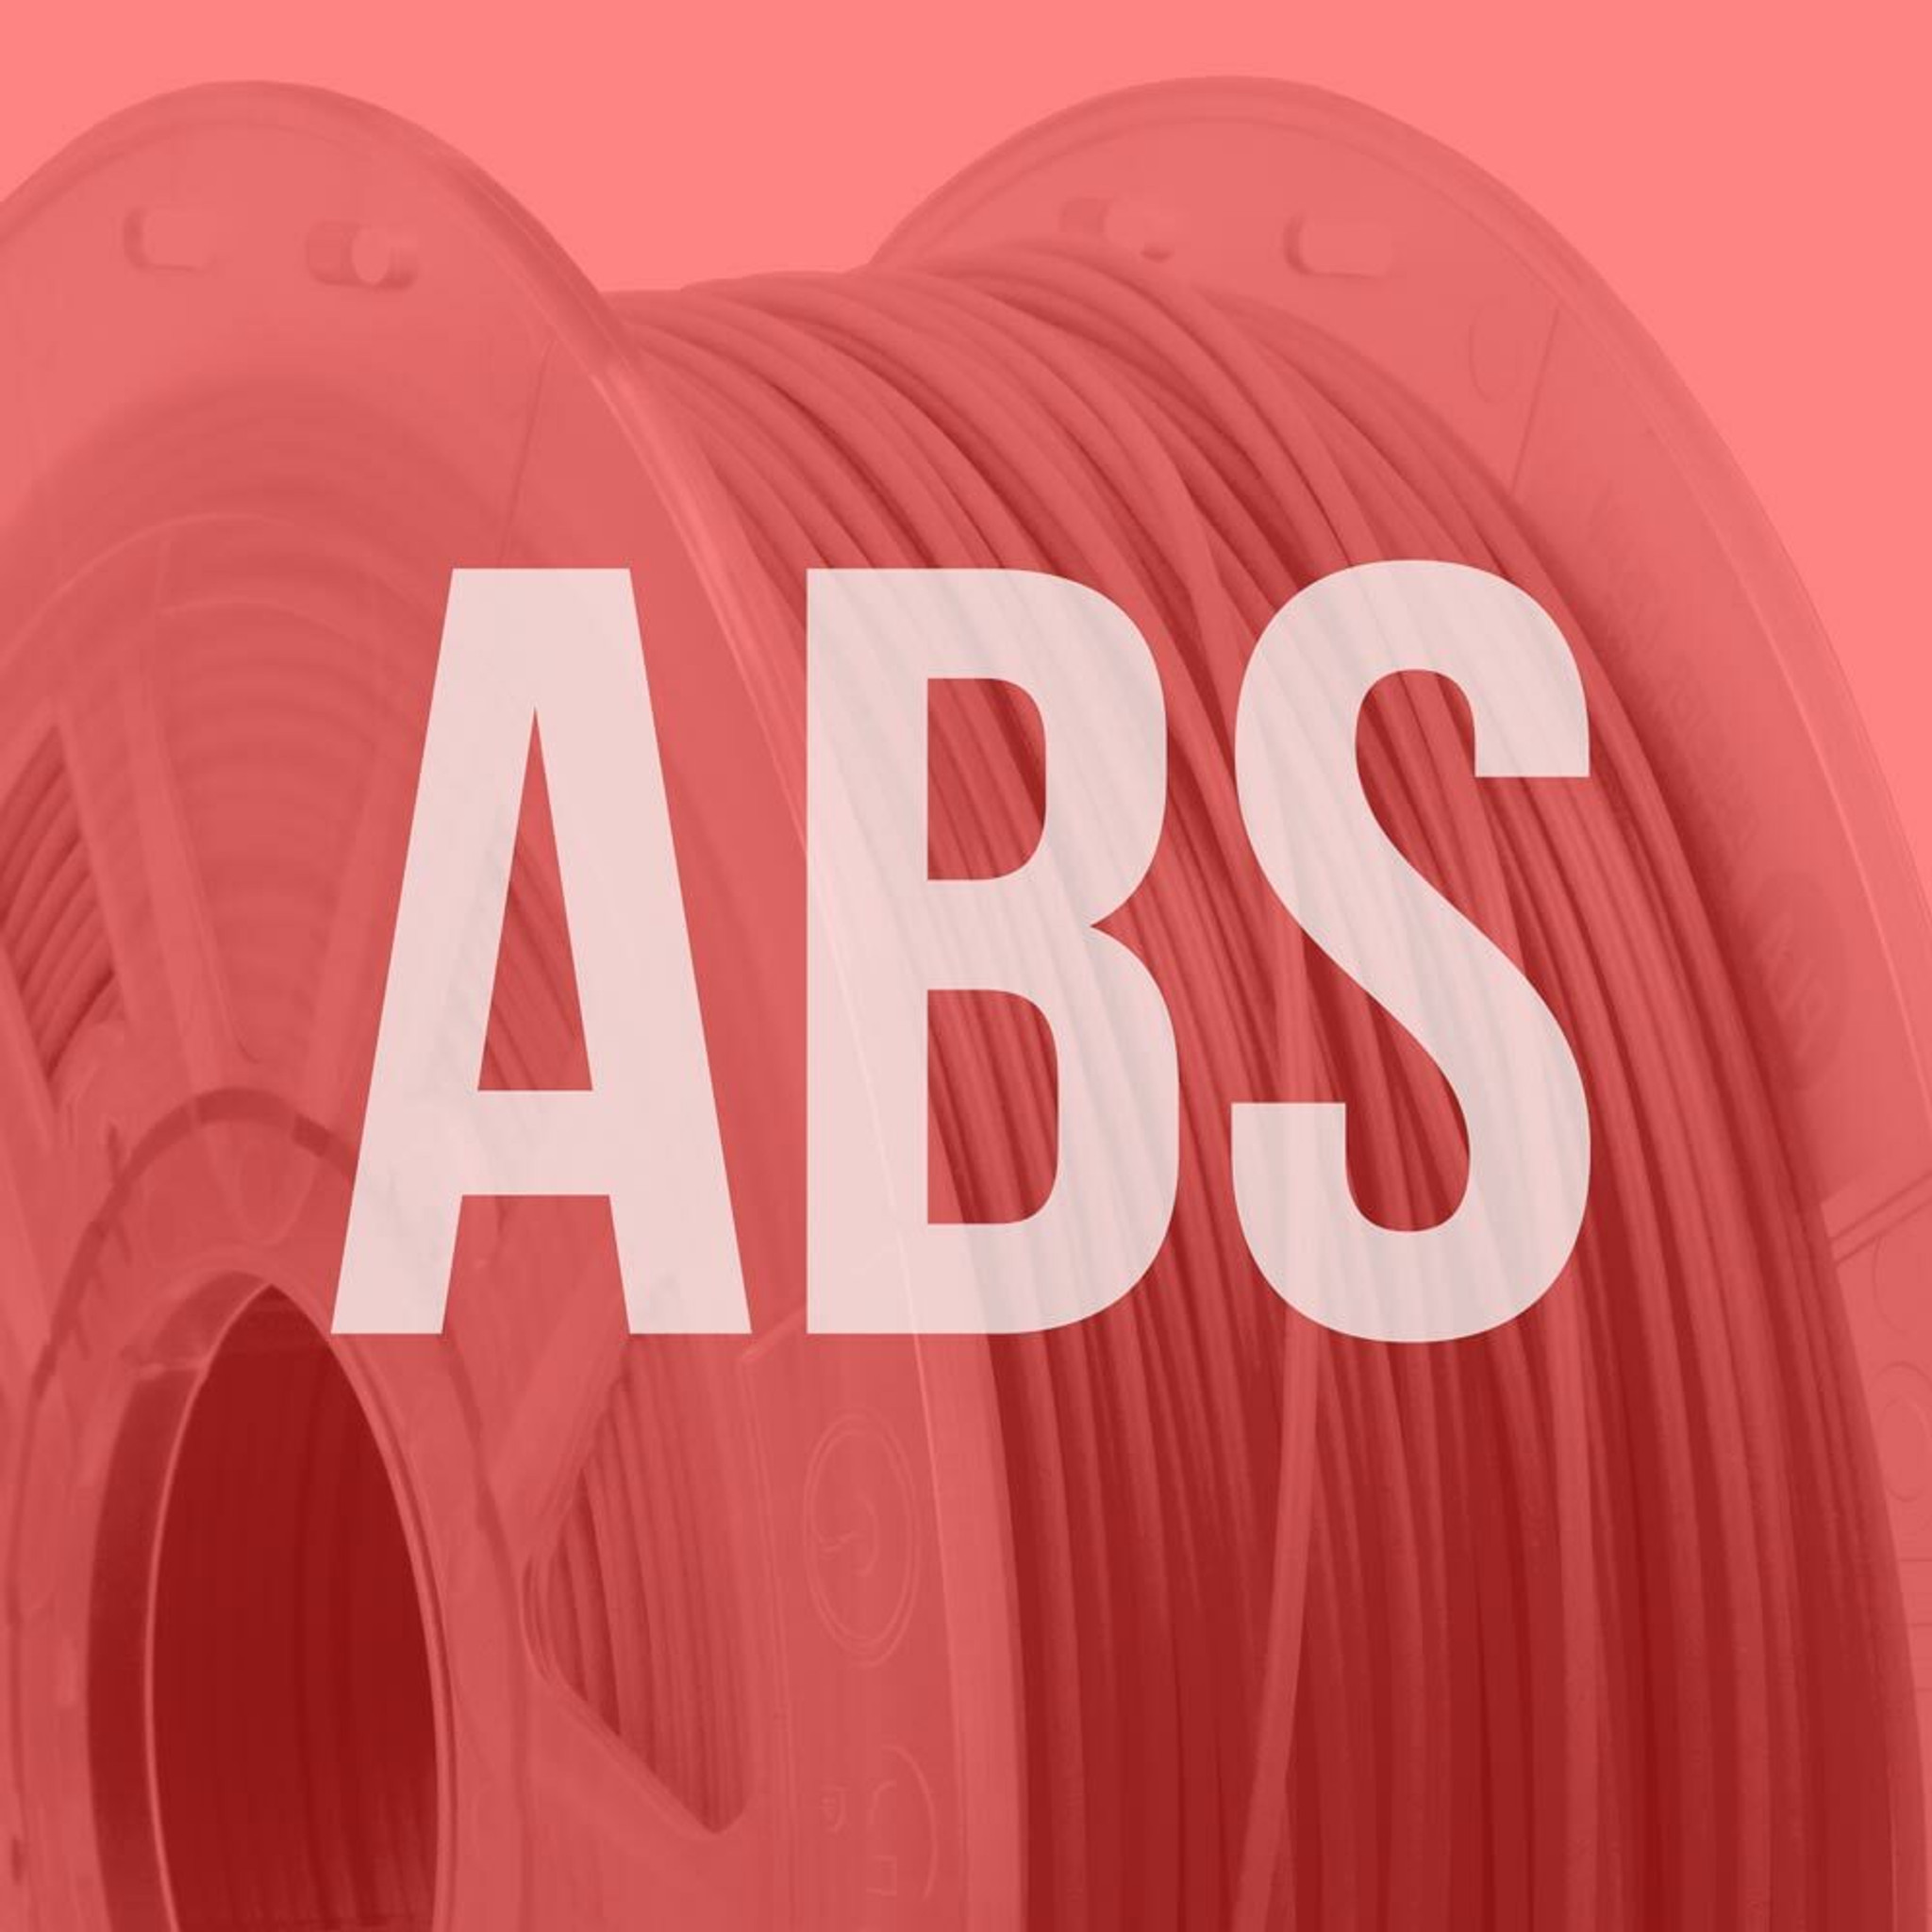 ABS Filament 200 g Spool